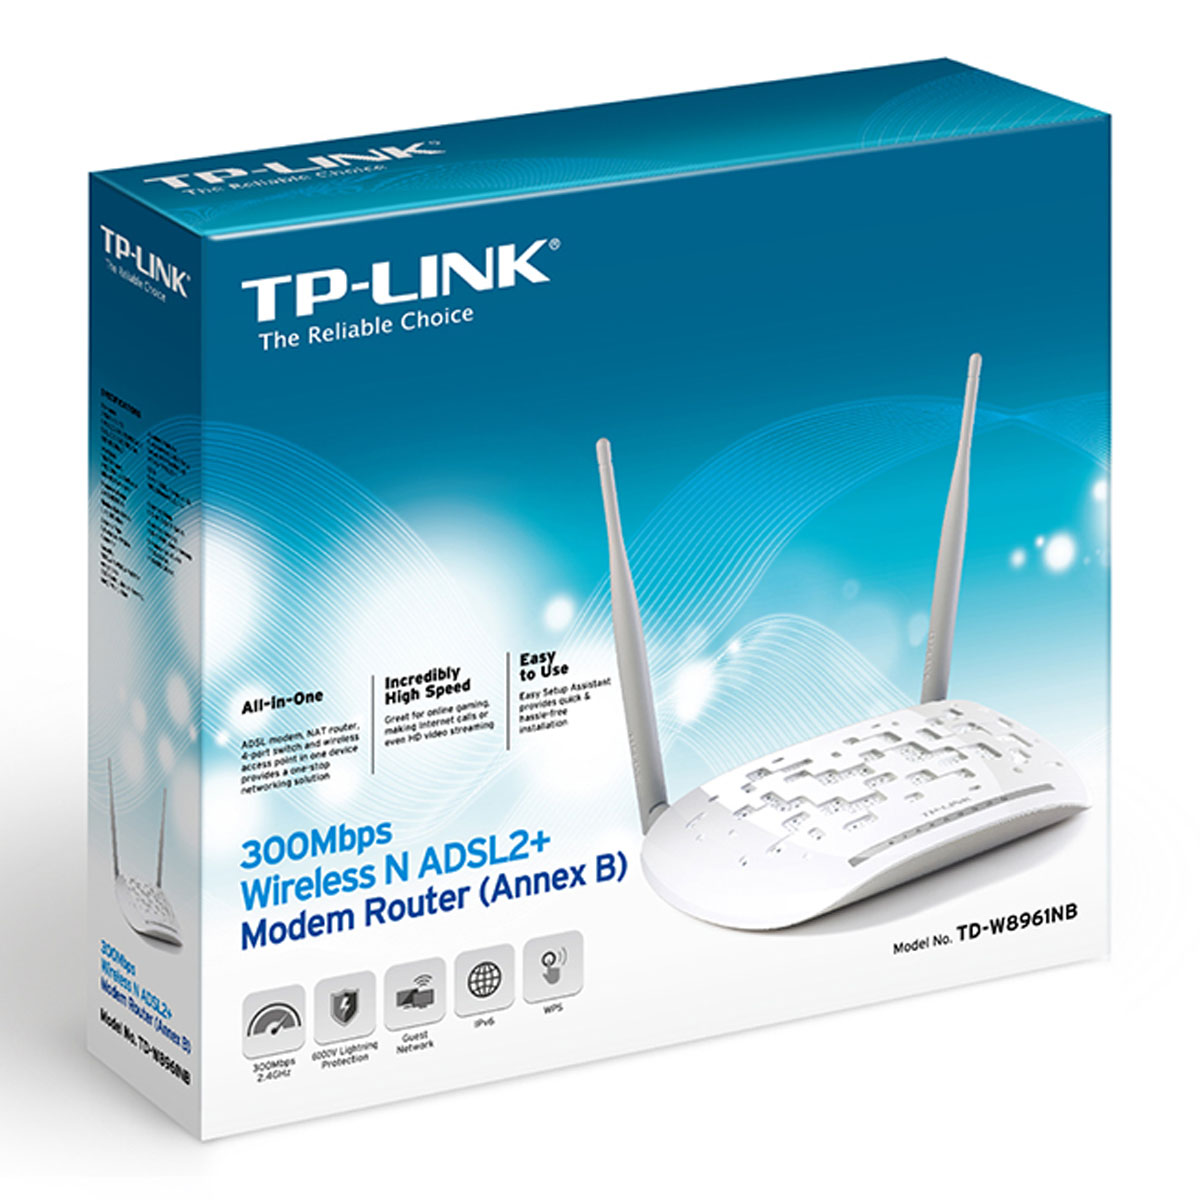 Wi-Fi роутер TP-LINK TD-W8961NB, серии NB, 802.11b/g/n, 300 Mb/s, цвет белый